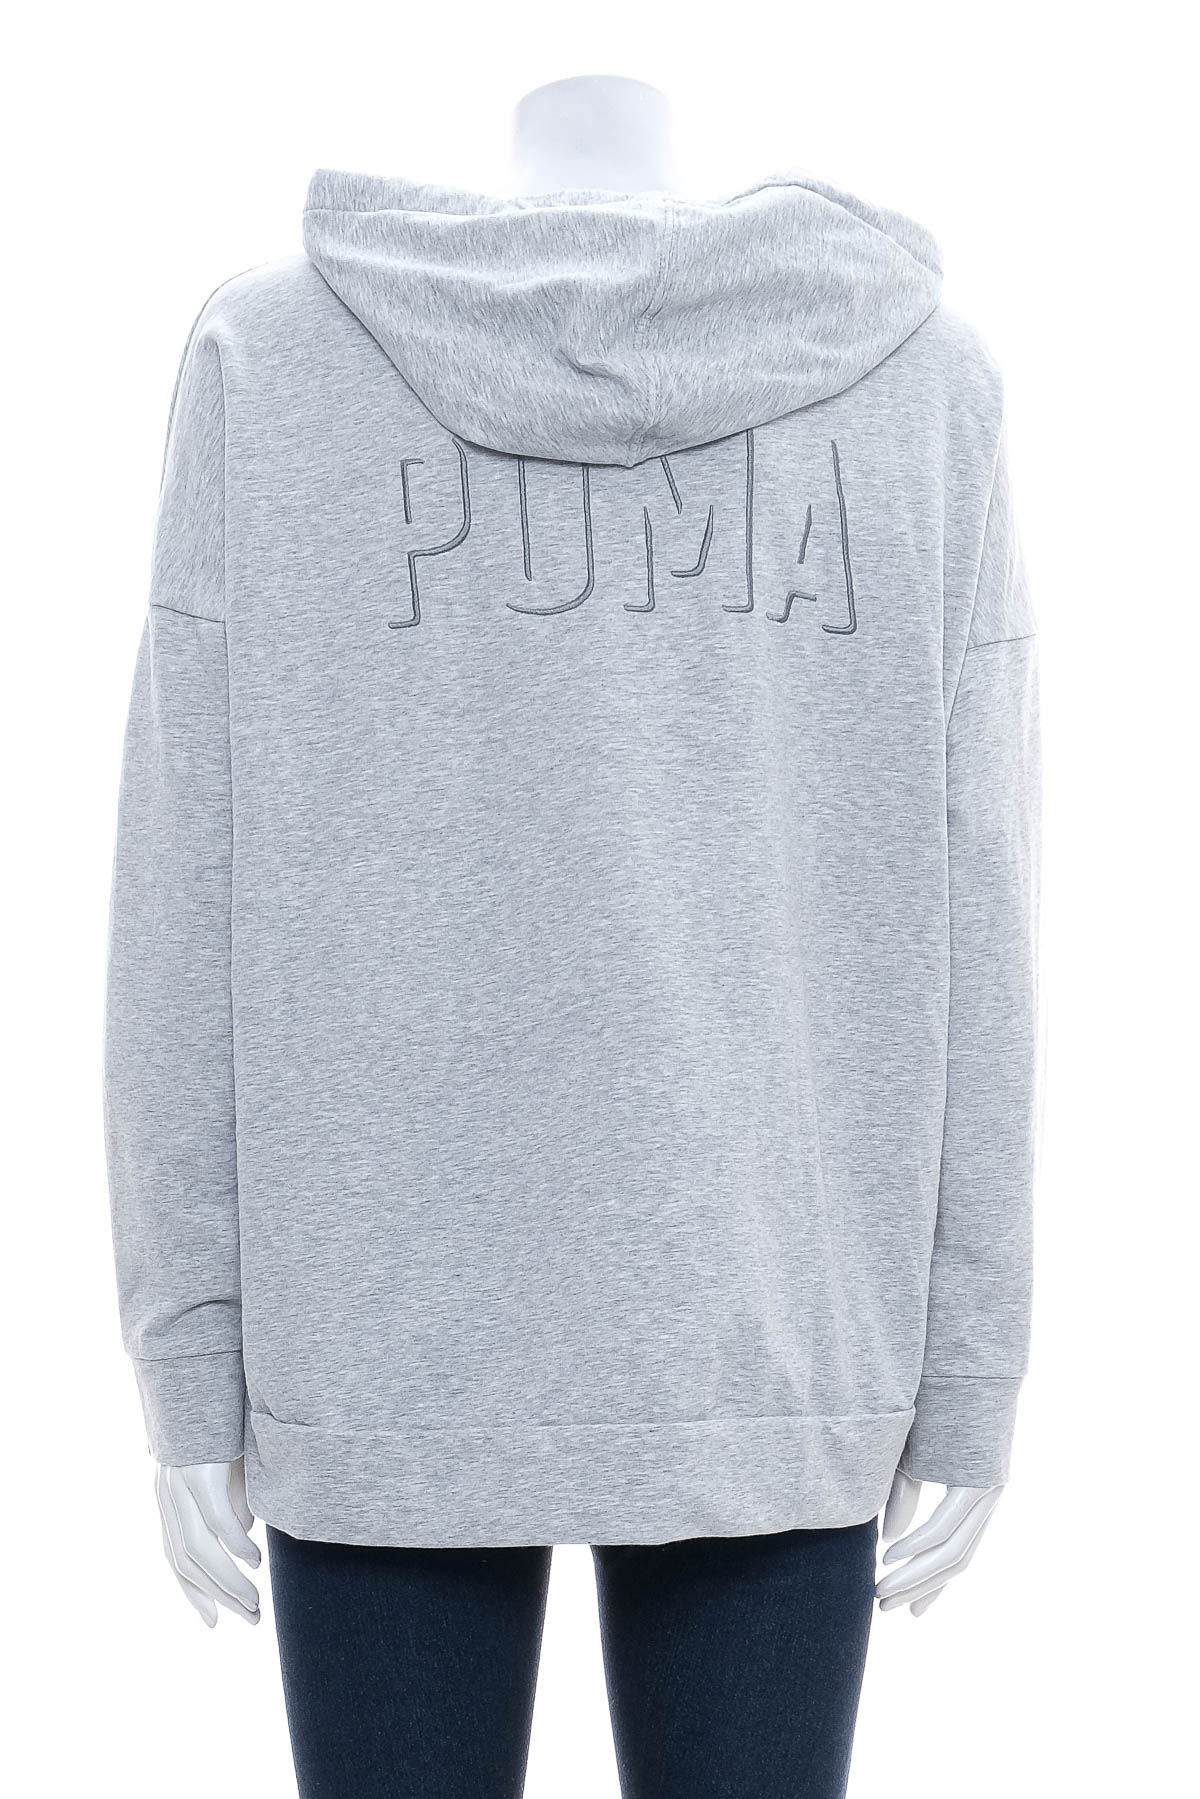 Women's sweatshirt - PUMA - 1